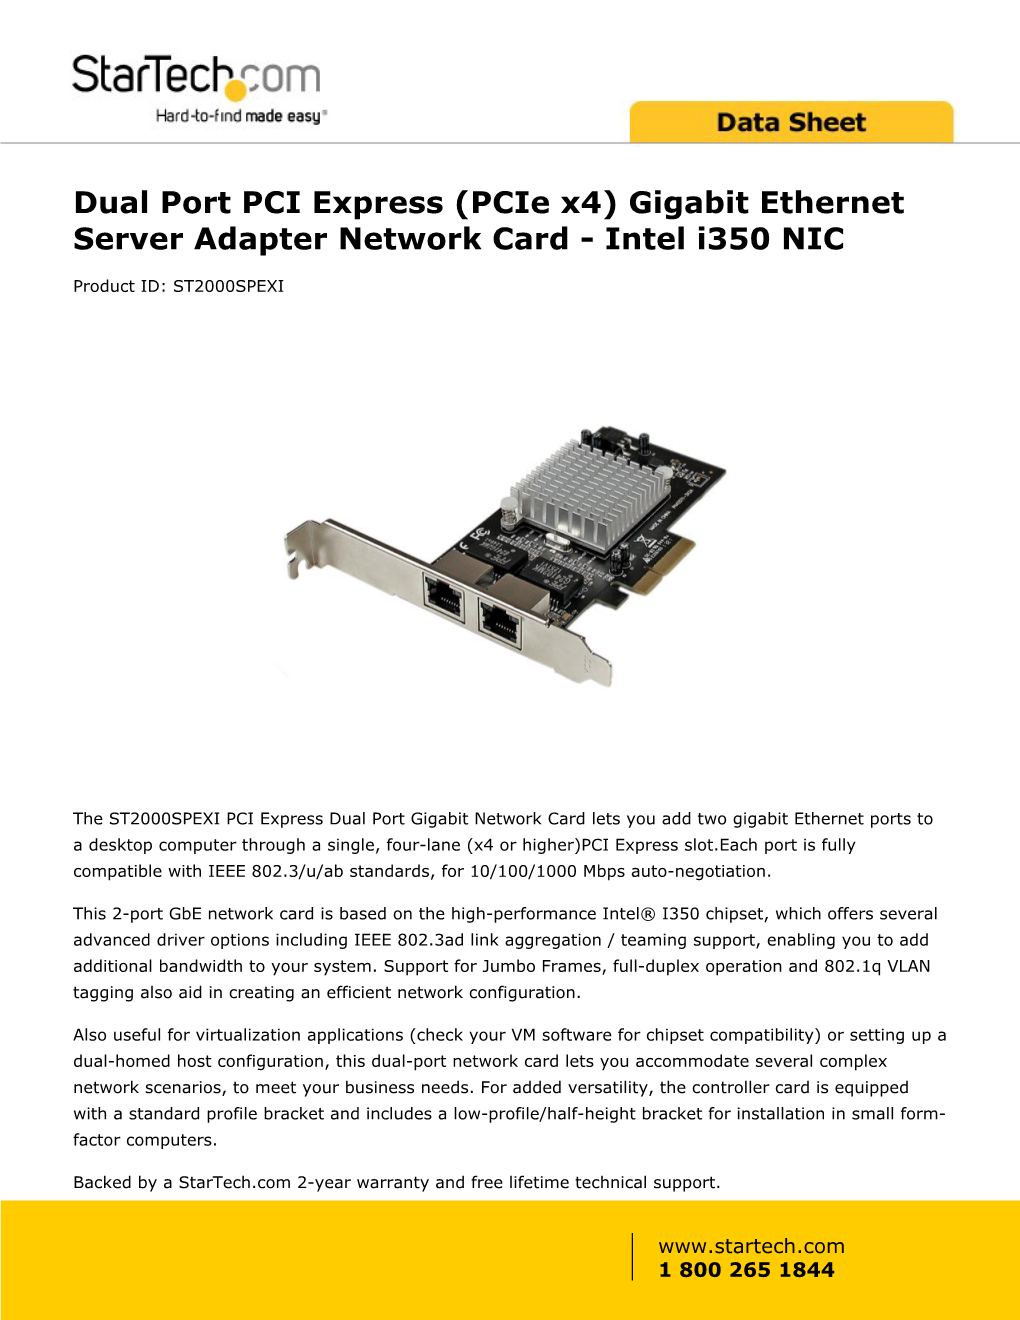 Dual Port PCI Express (Pcie X4) Gigabit Ethernet Server Adapter Network Card - Intel I350 NIC